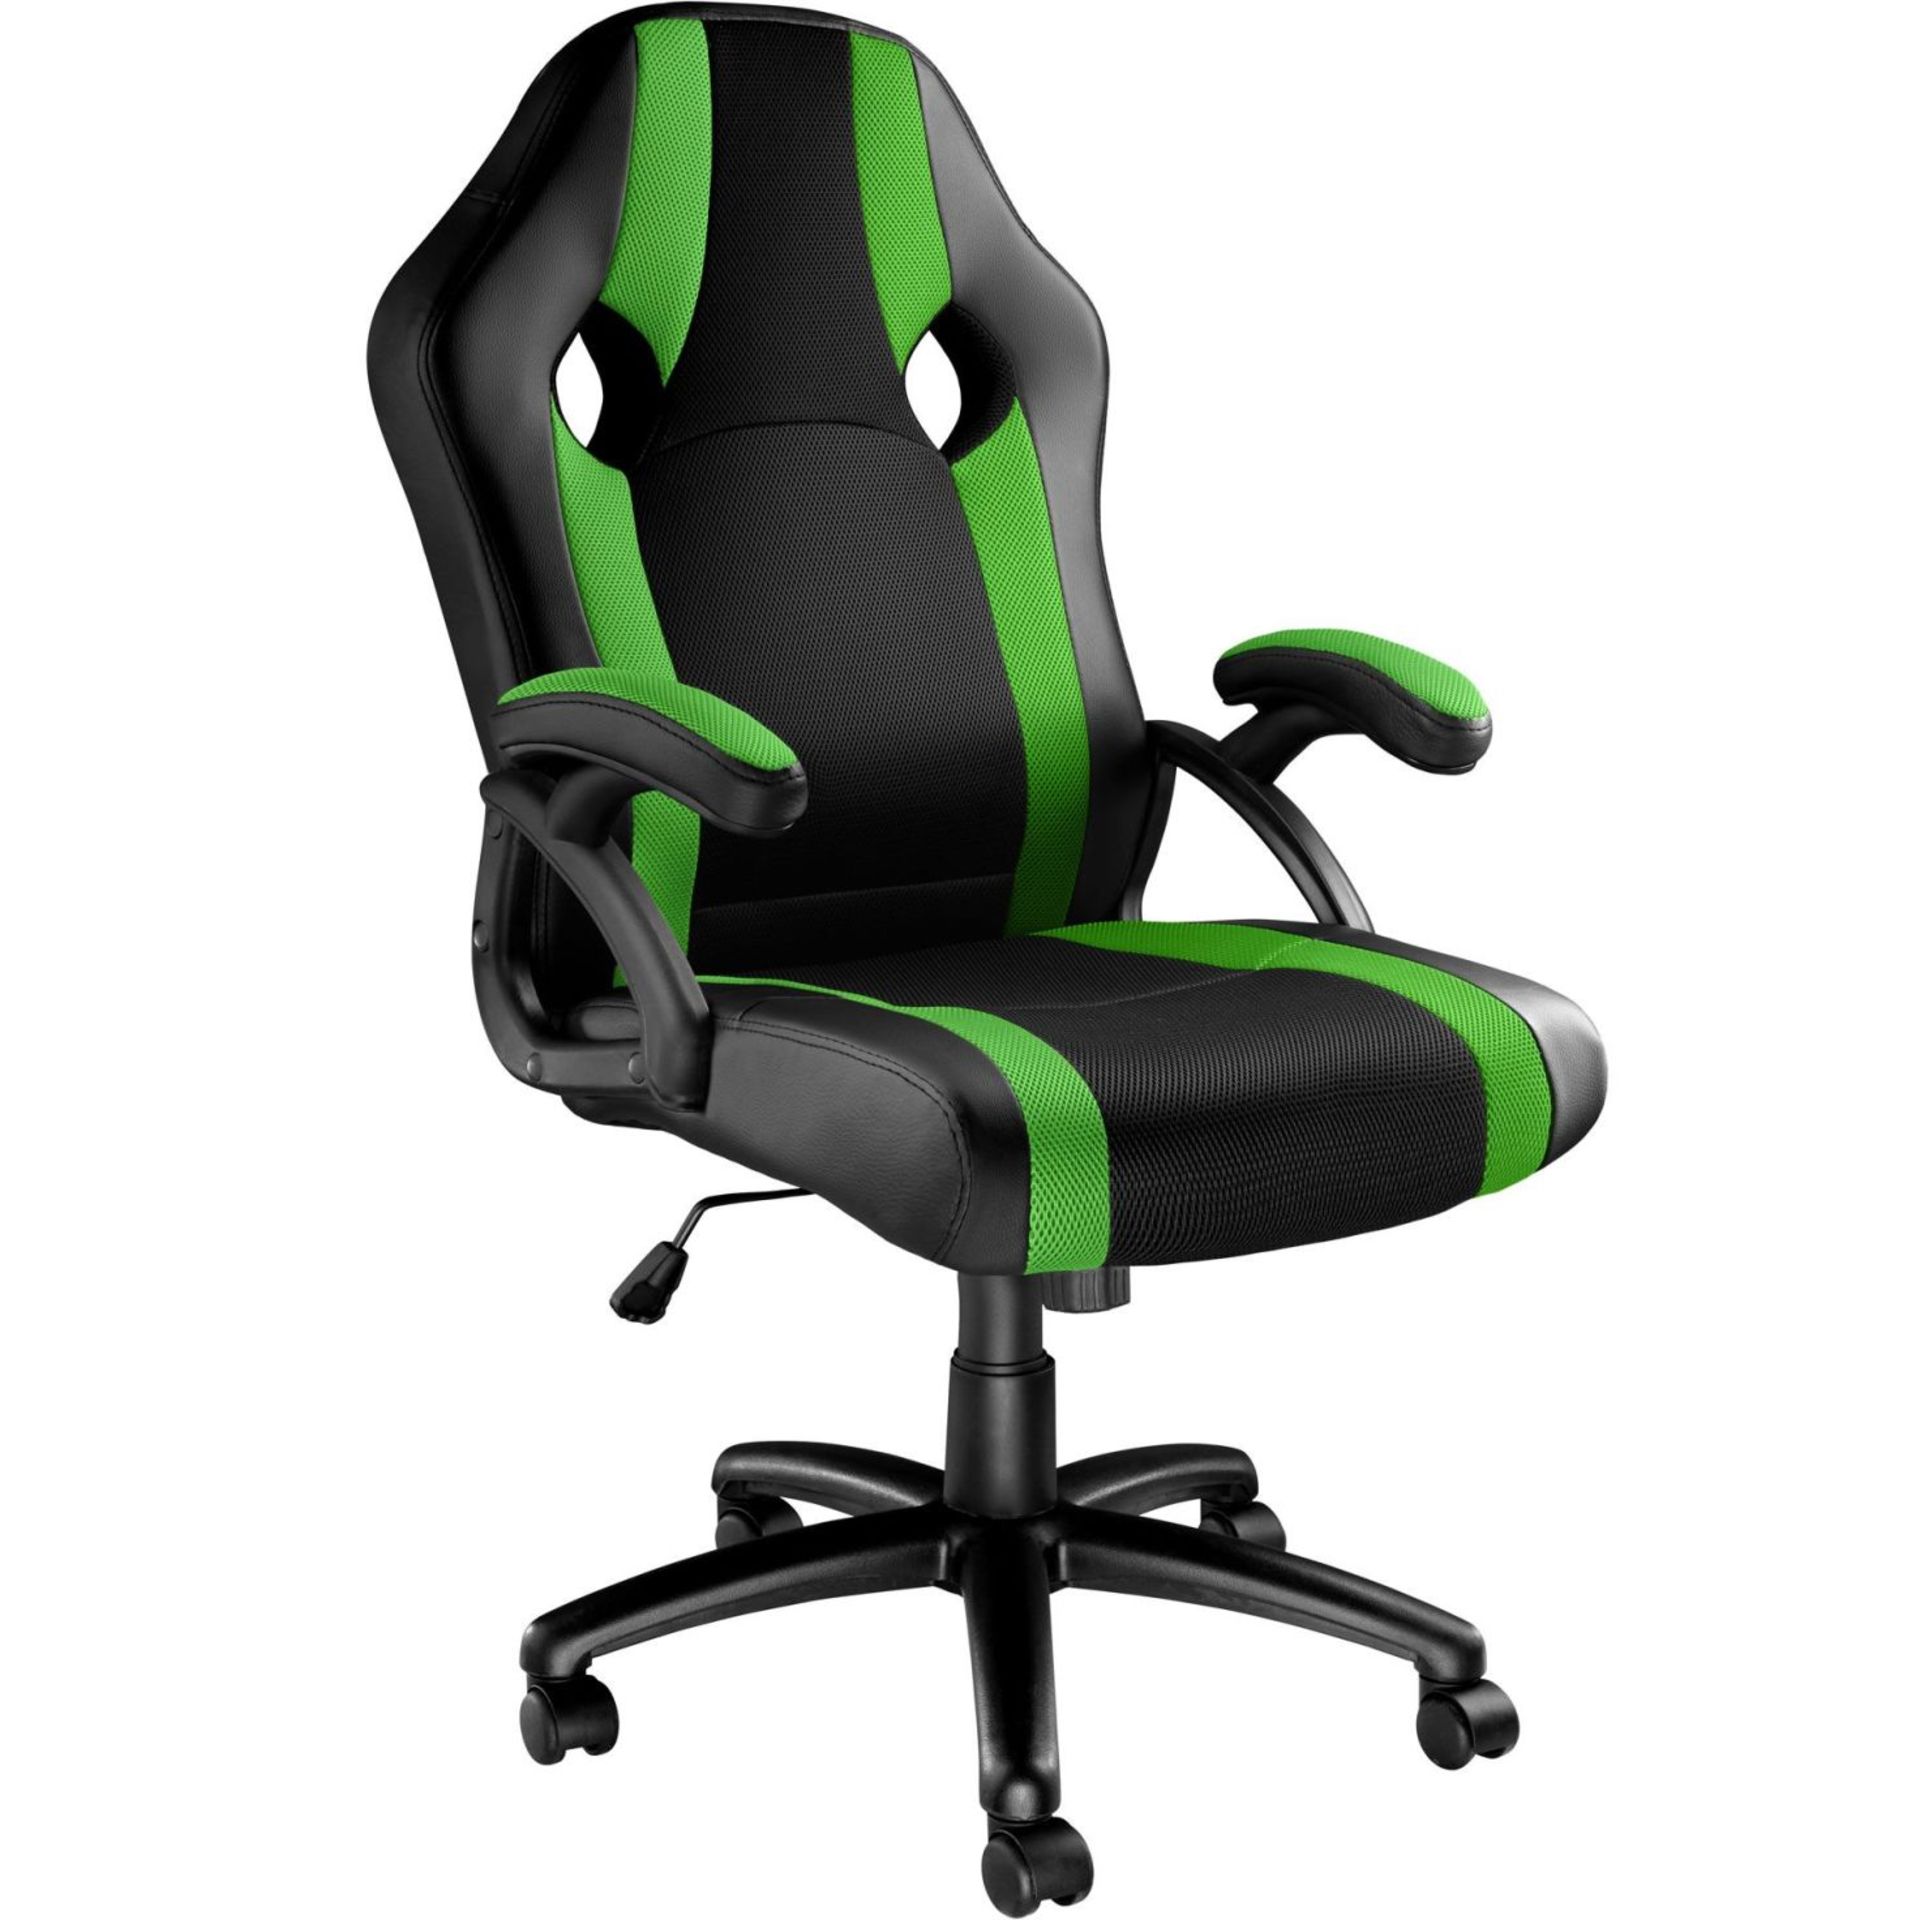 Tectake - Gaming Chair Goodman Black And Green - Boxed. RRP £78.99 - Image 2 of 2